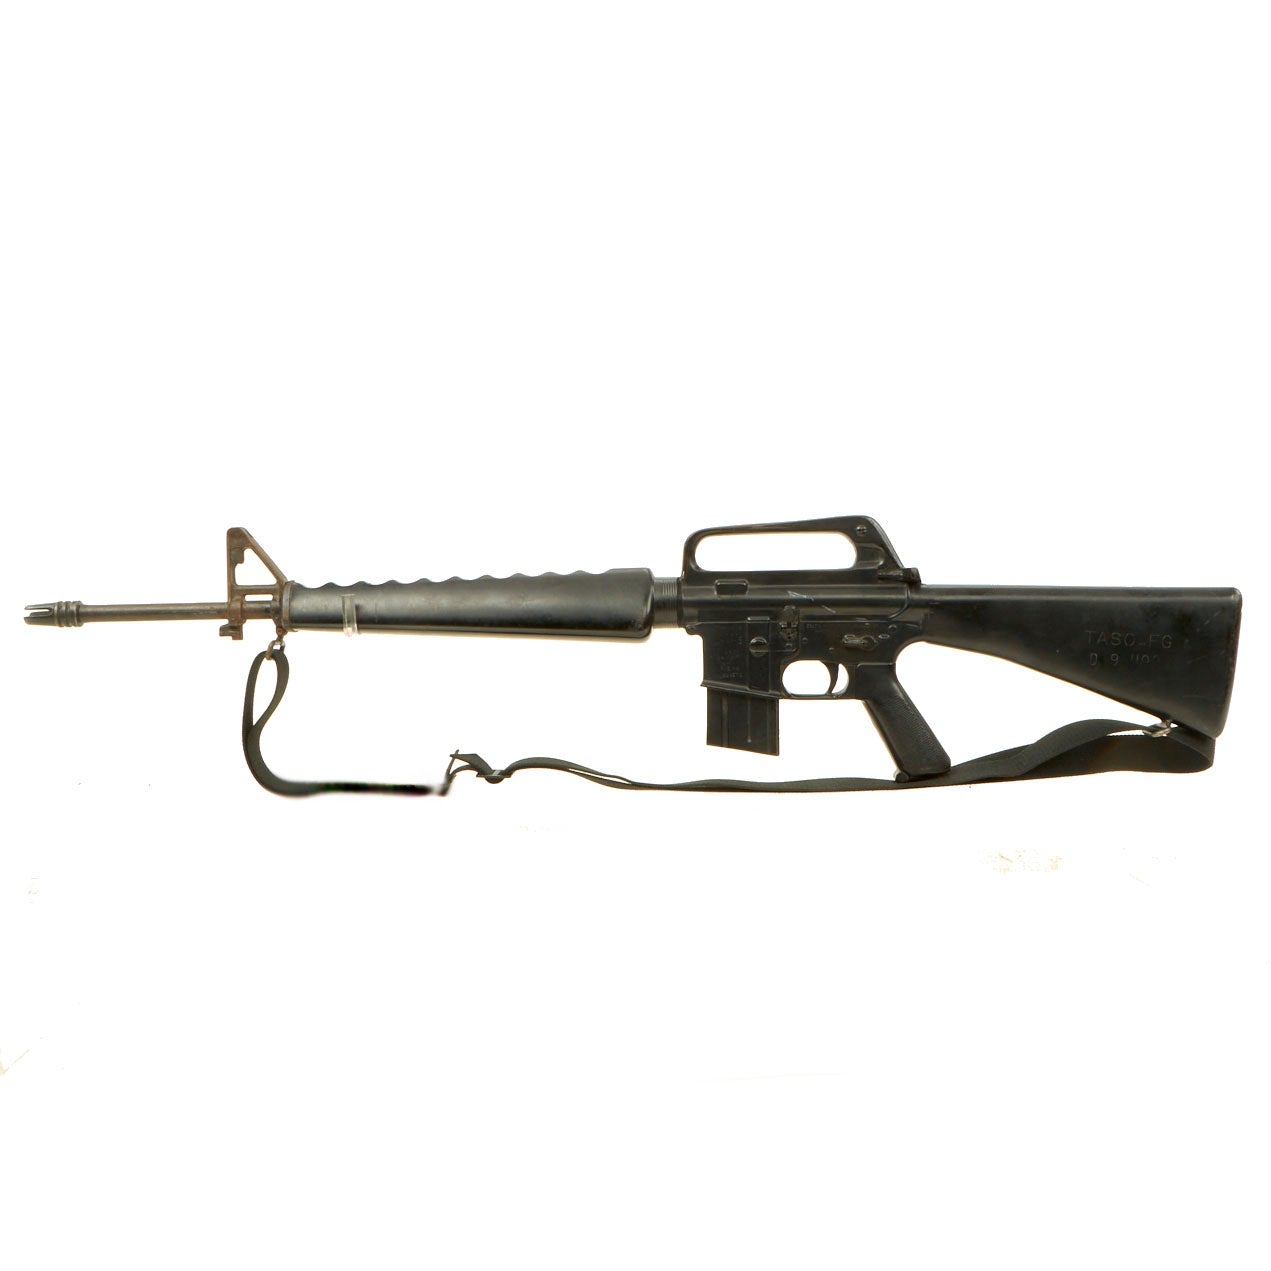 Original U.S. Vietnam War Colt M16A1 Training Rifle - AR-15 